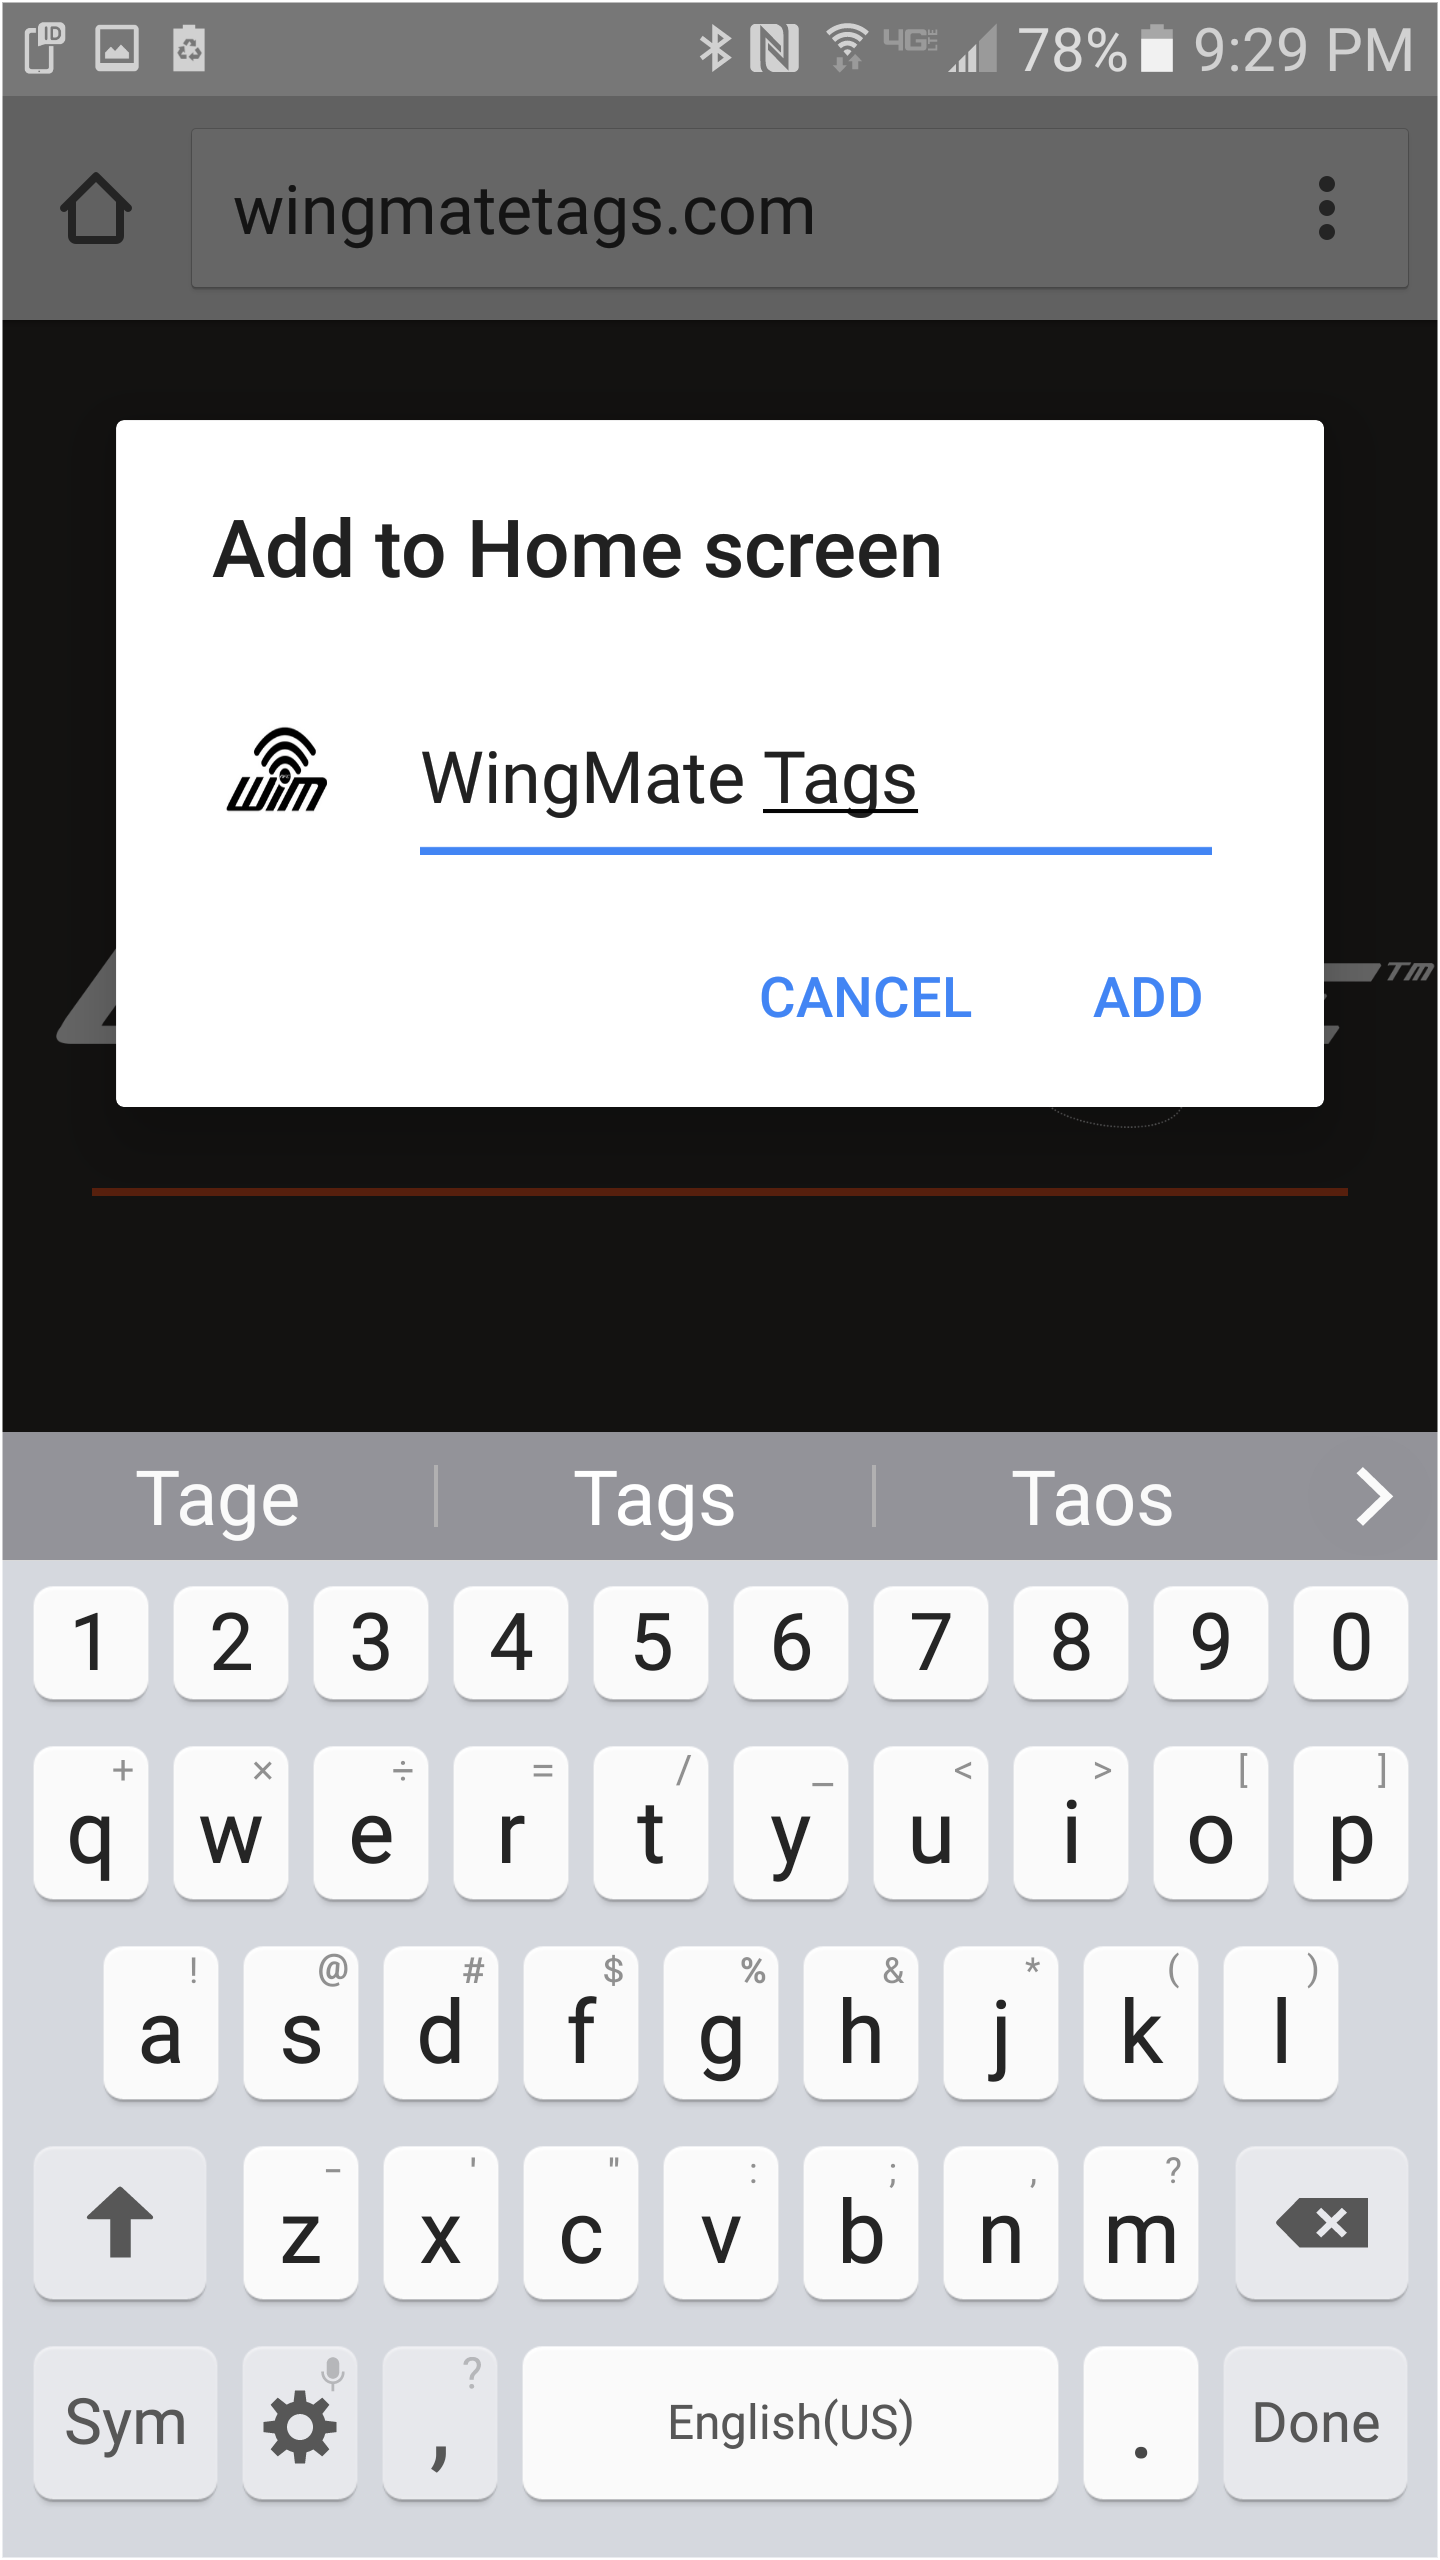 wingmate tags input